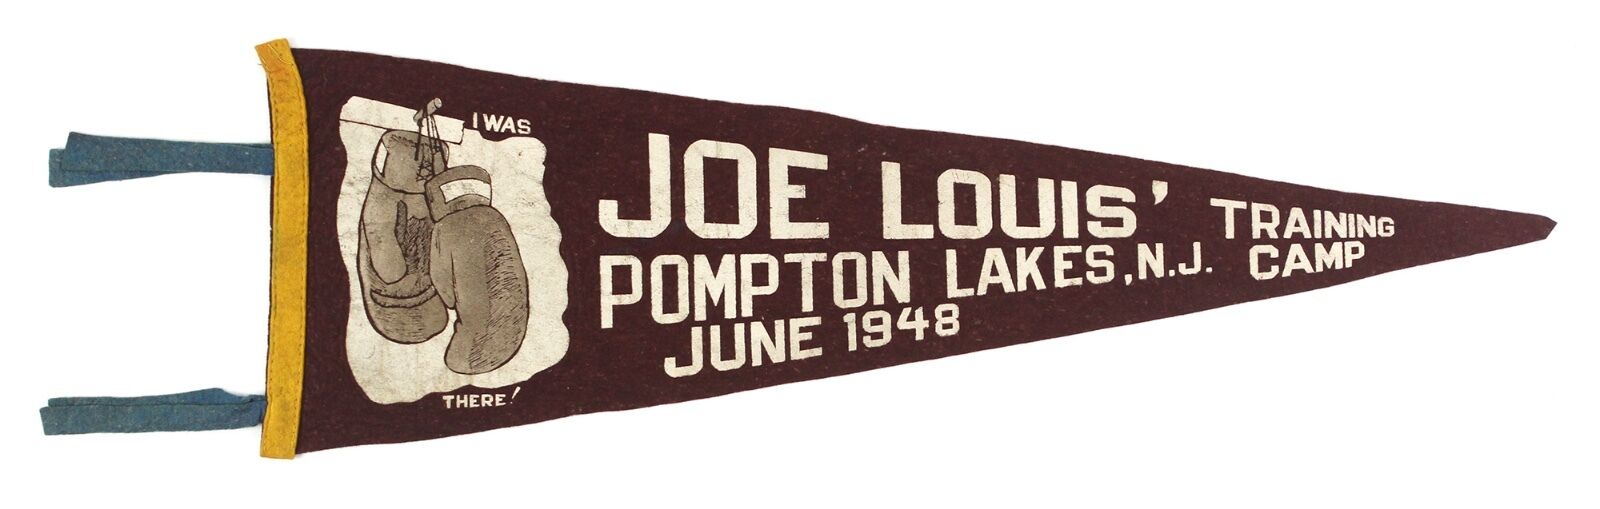 RARE 1948 Joe Louis Pompton Lakes,New Jersey Training Camp Full Size 25\